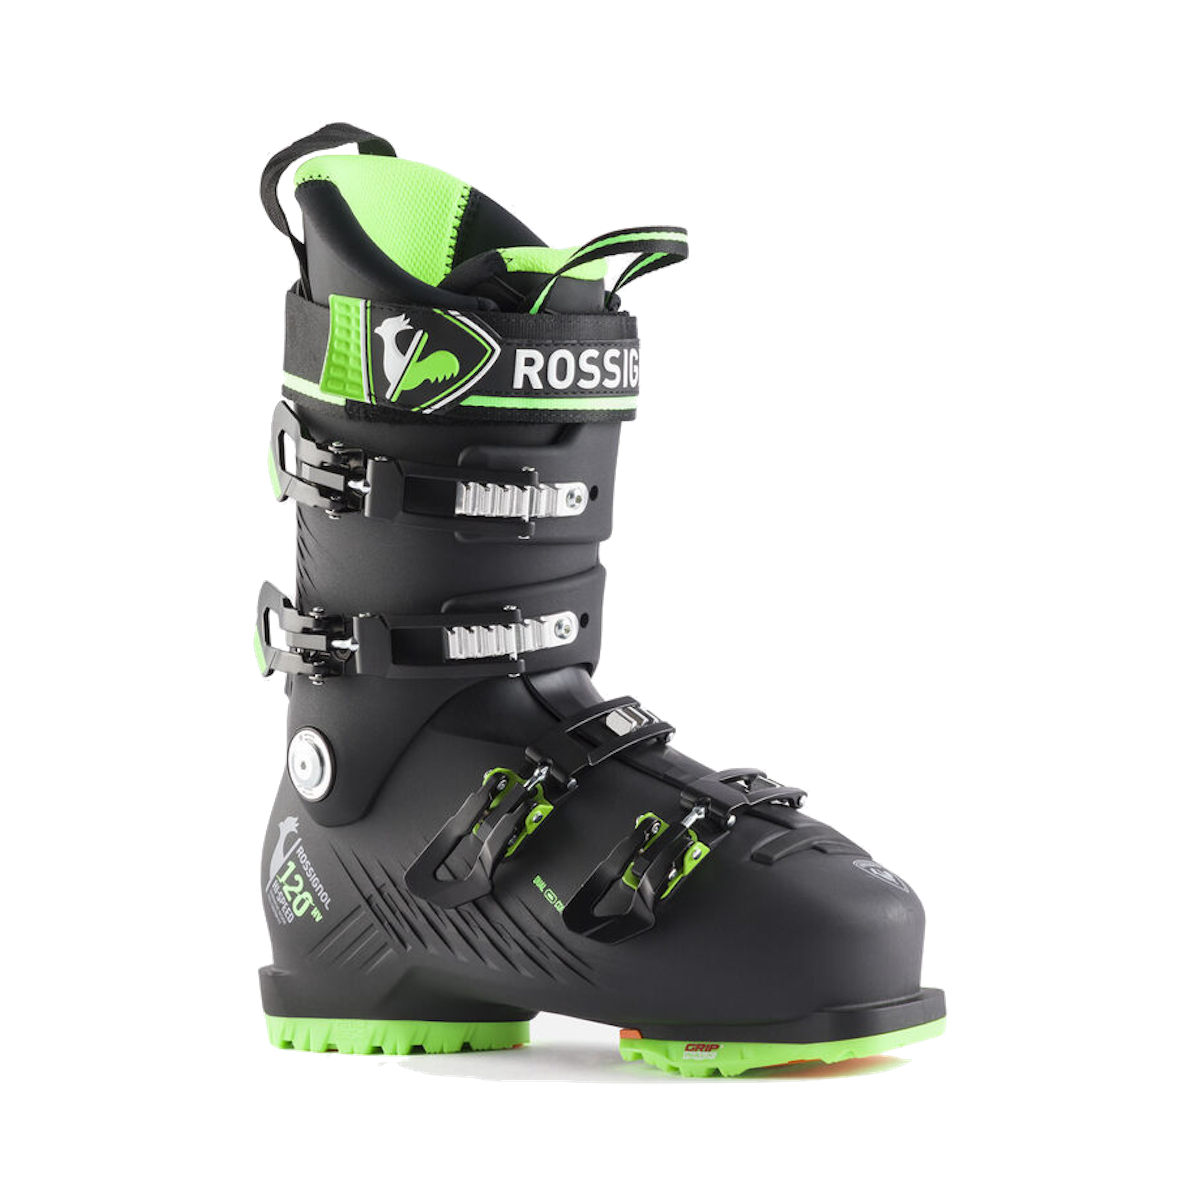 ROSSIGNOL HI-SPEED 120 HV GW alpine ski boots - black/green